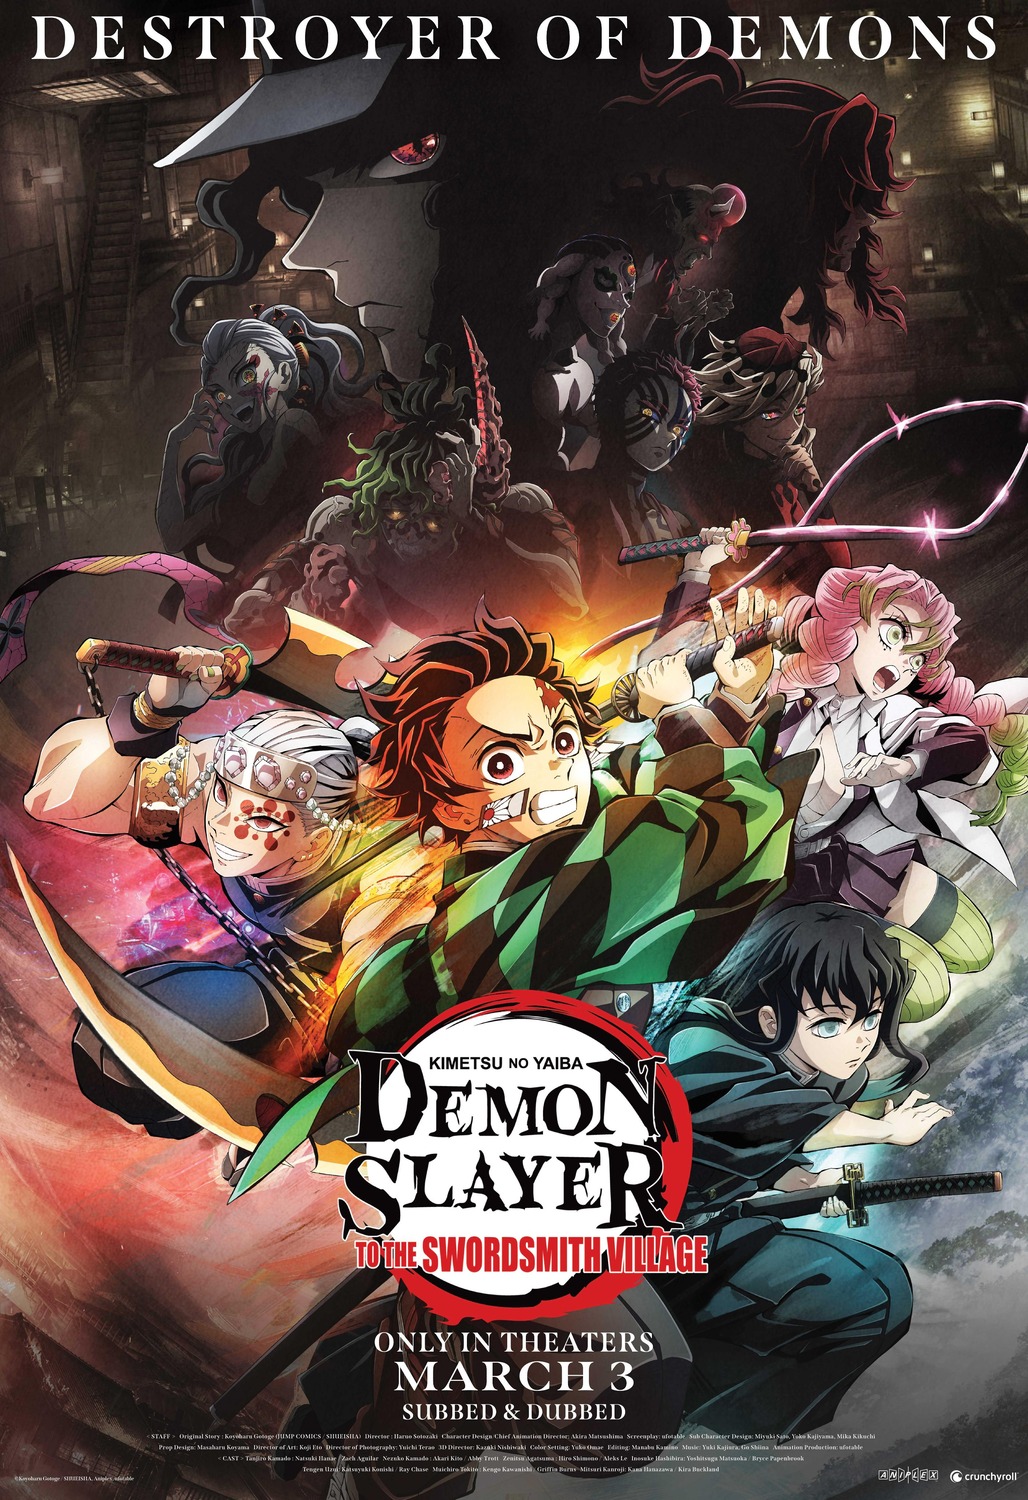 Extra Large Movie Poster Image for Demon Slayer: Kimetsu No Yaiba - To the Swordsmith Village 